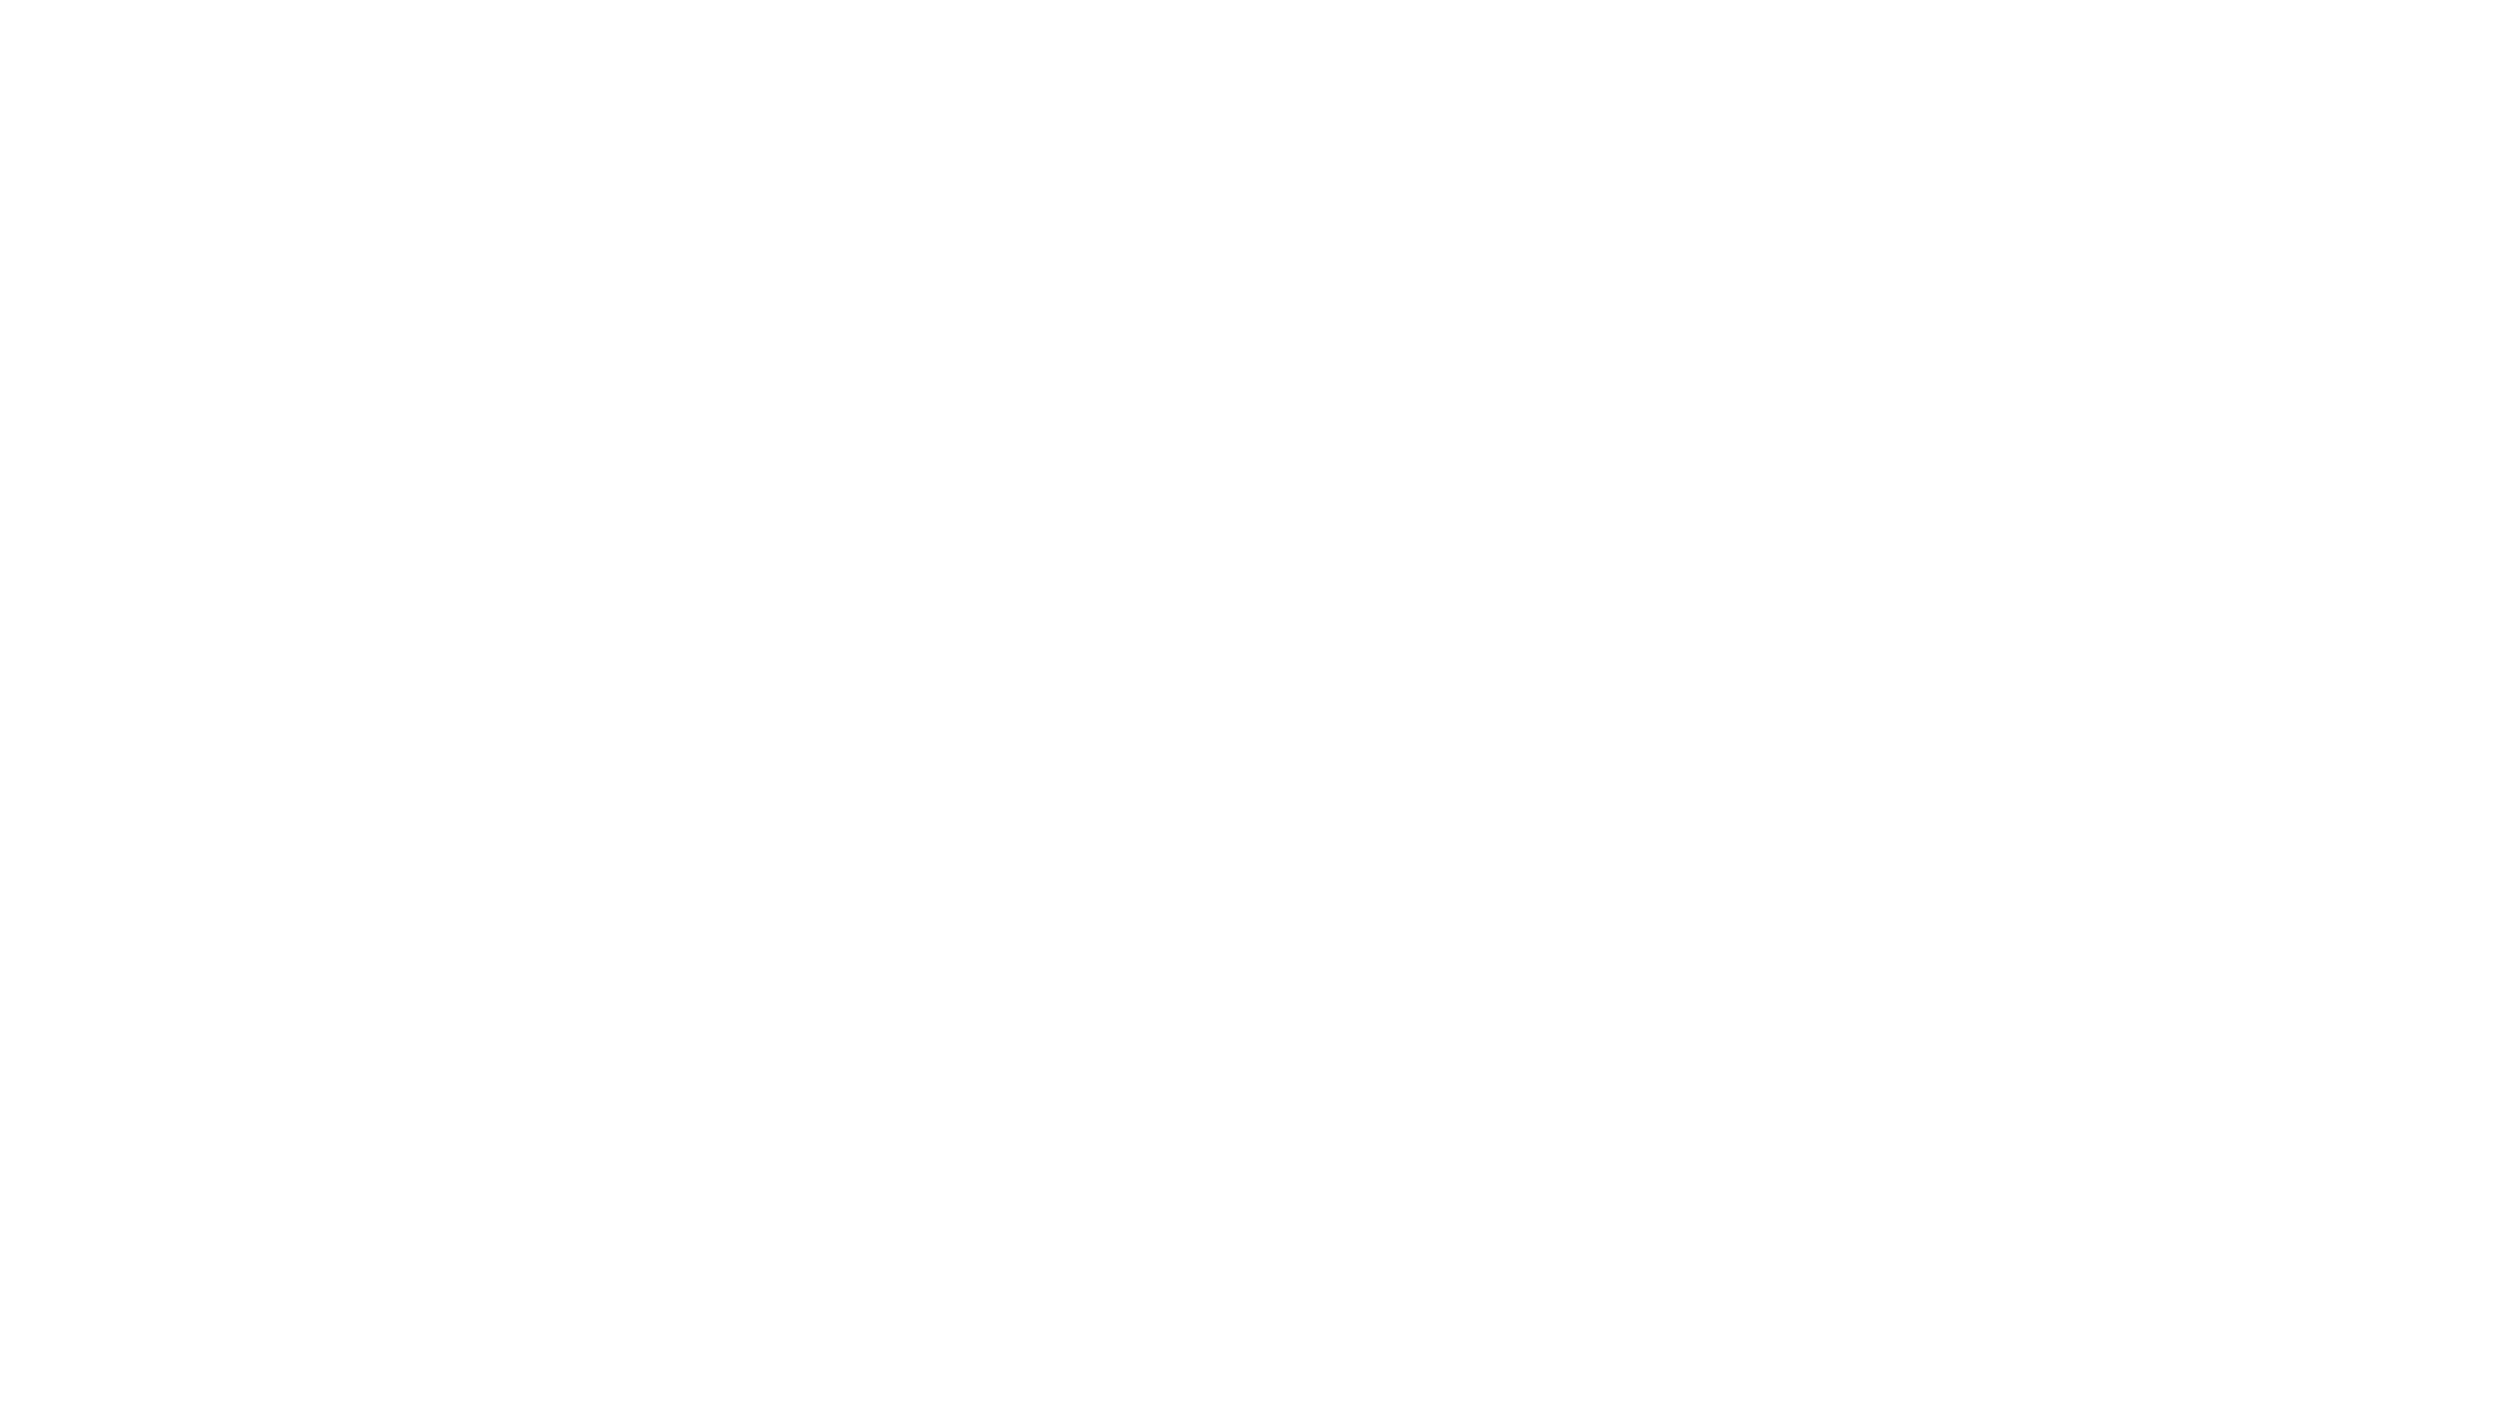 MICHAEL FLOWERS